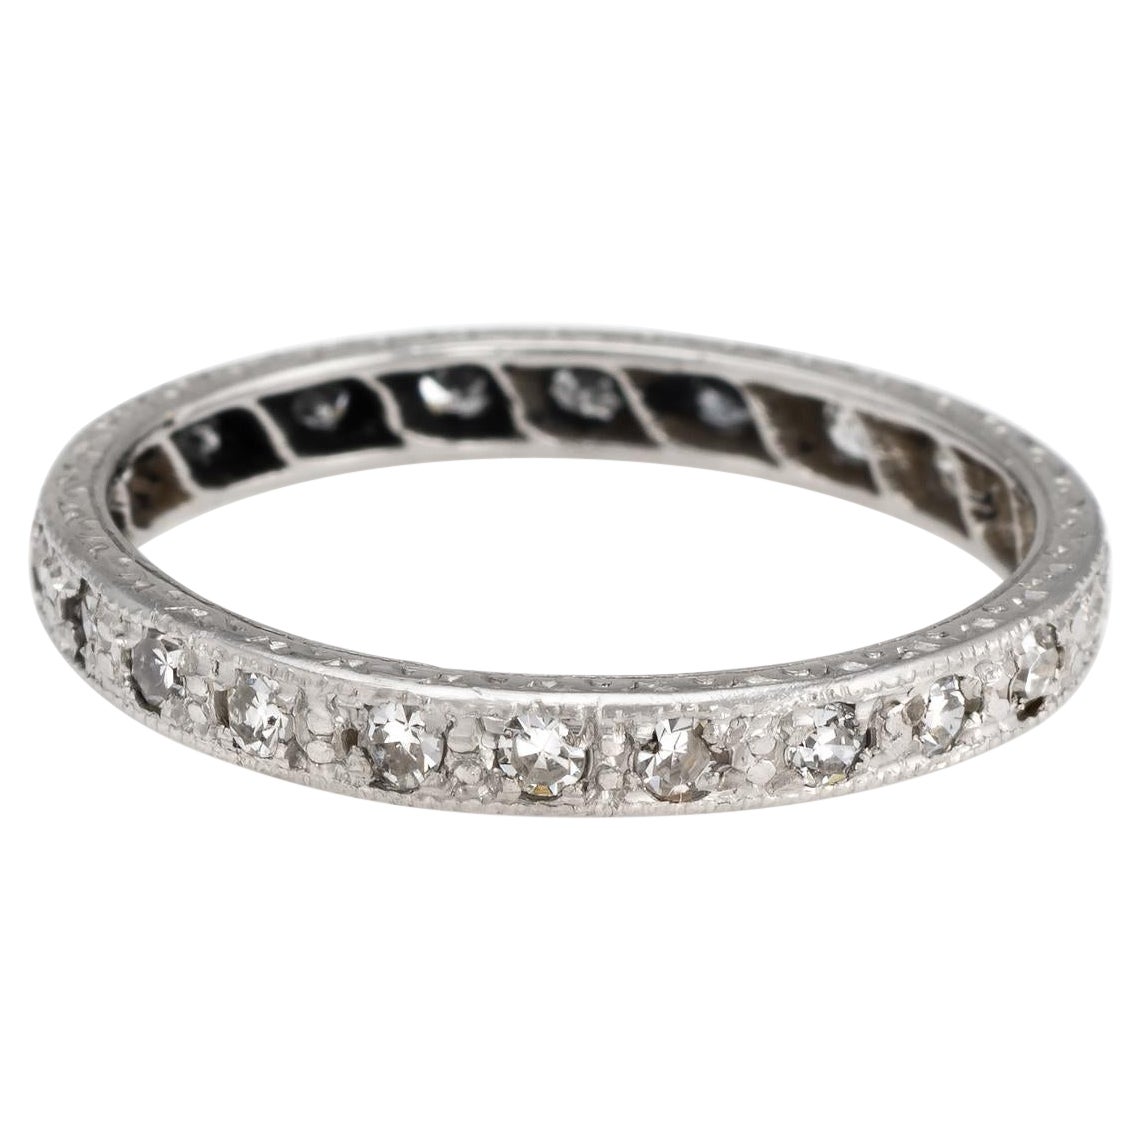 Vintage Deco Diamond Band Platinum Wedding Ring Etched Vintage Jewelry